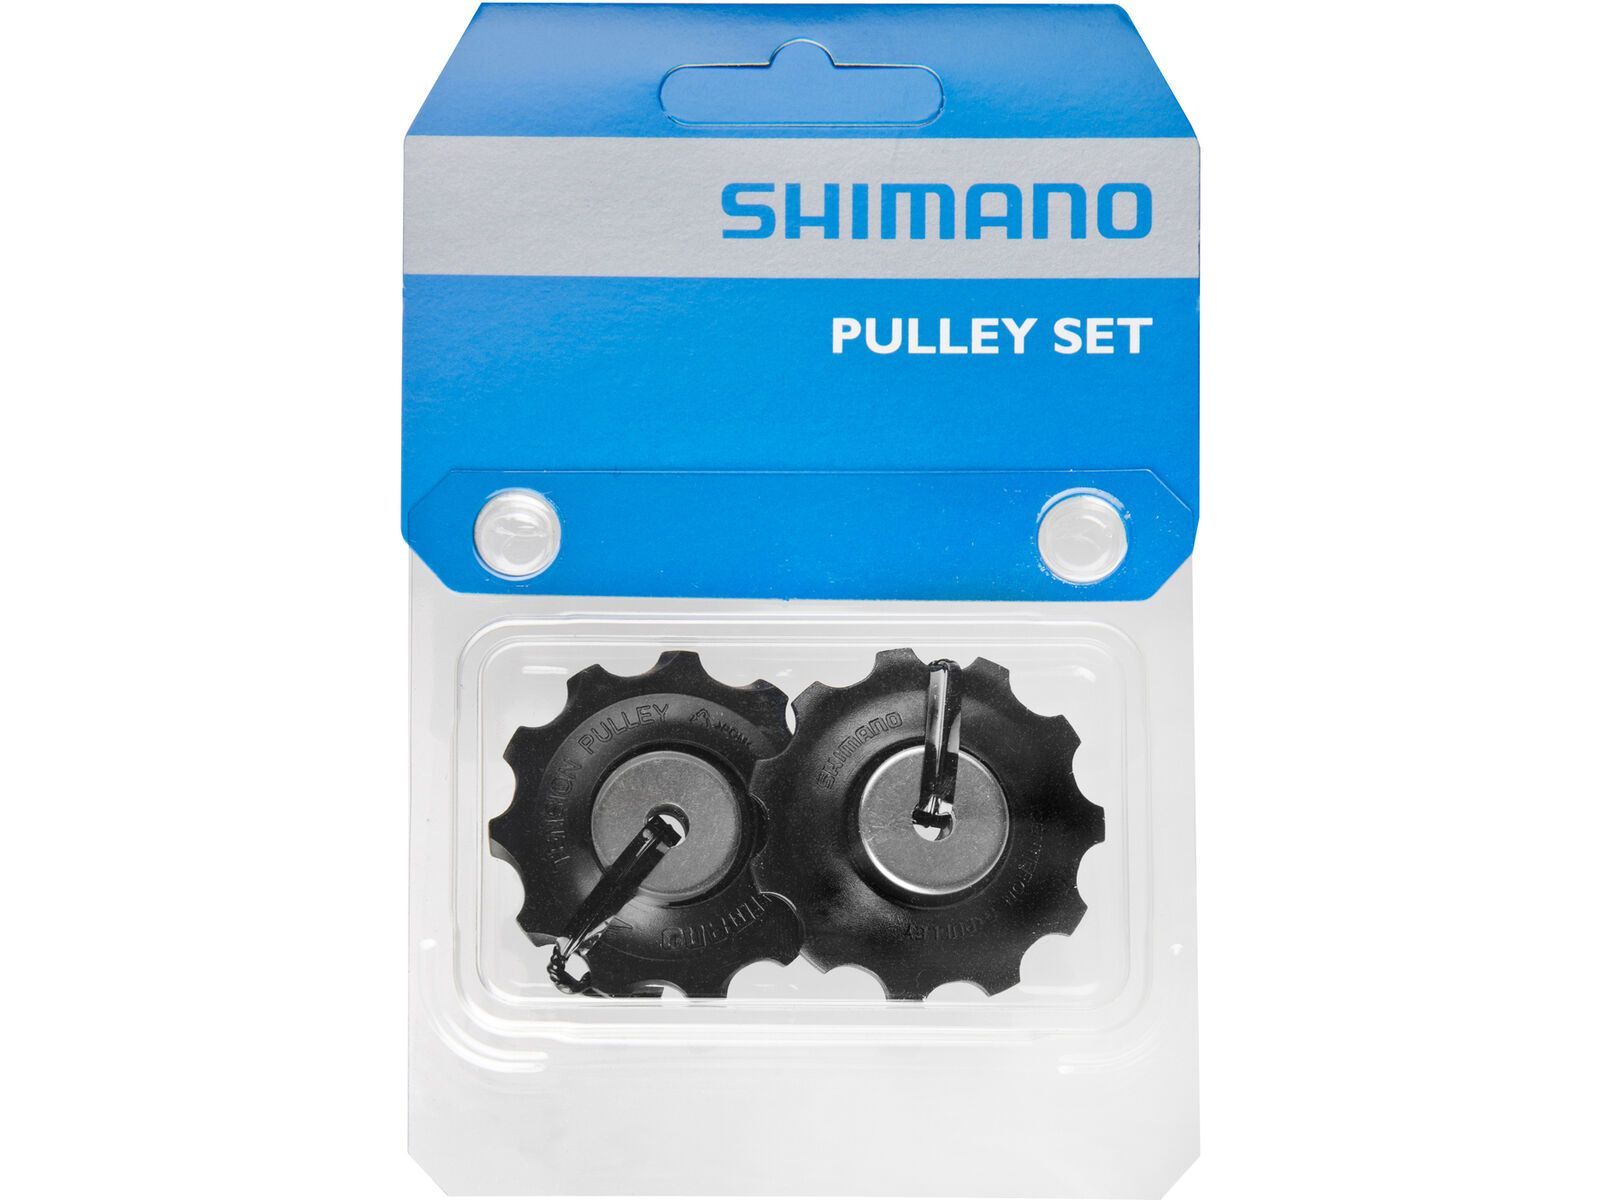 Shimano 105 Schaltrollensatz (RD-5800 GS) | Bild 1